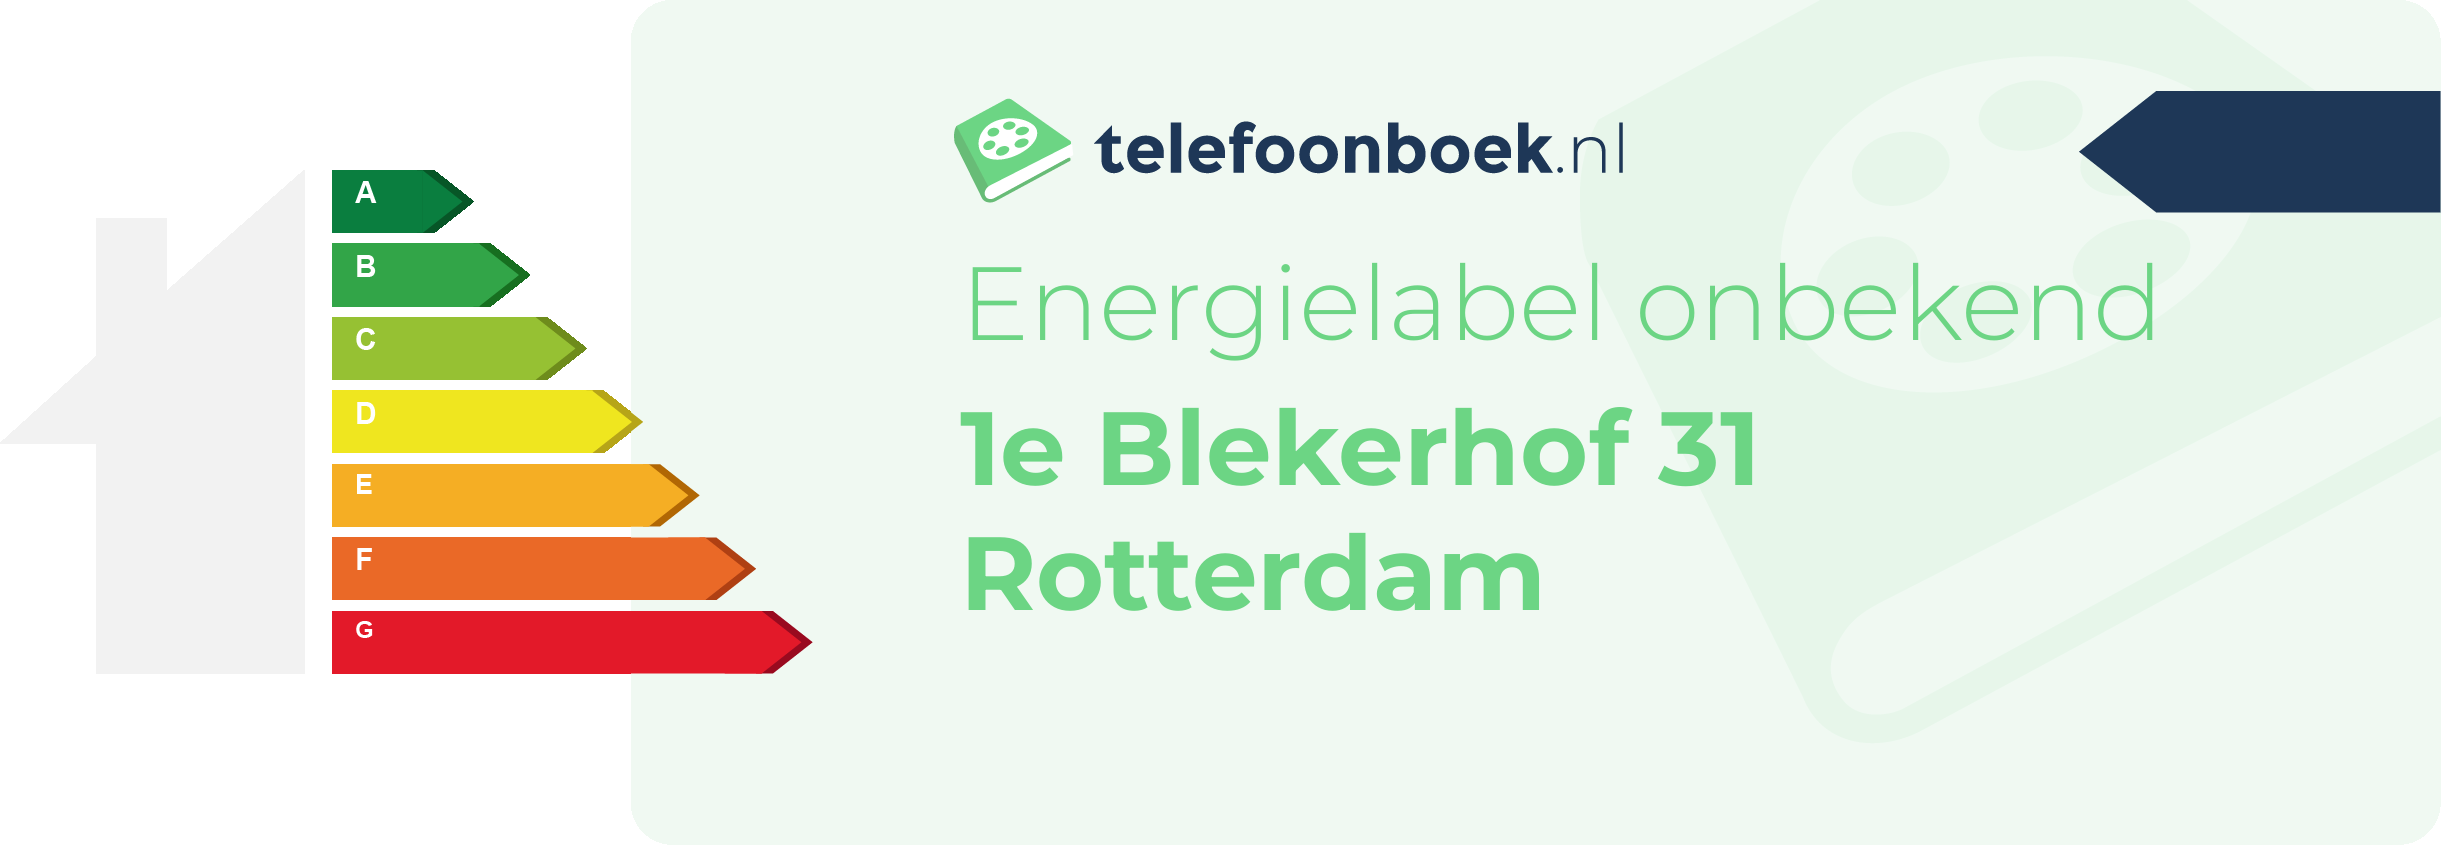 Energielabel 1e Blekerhof 31 Rotterdam